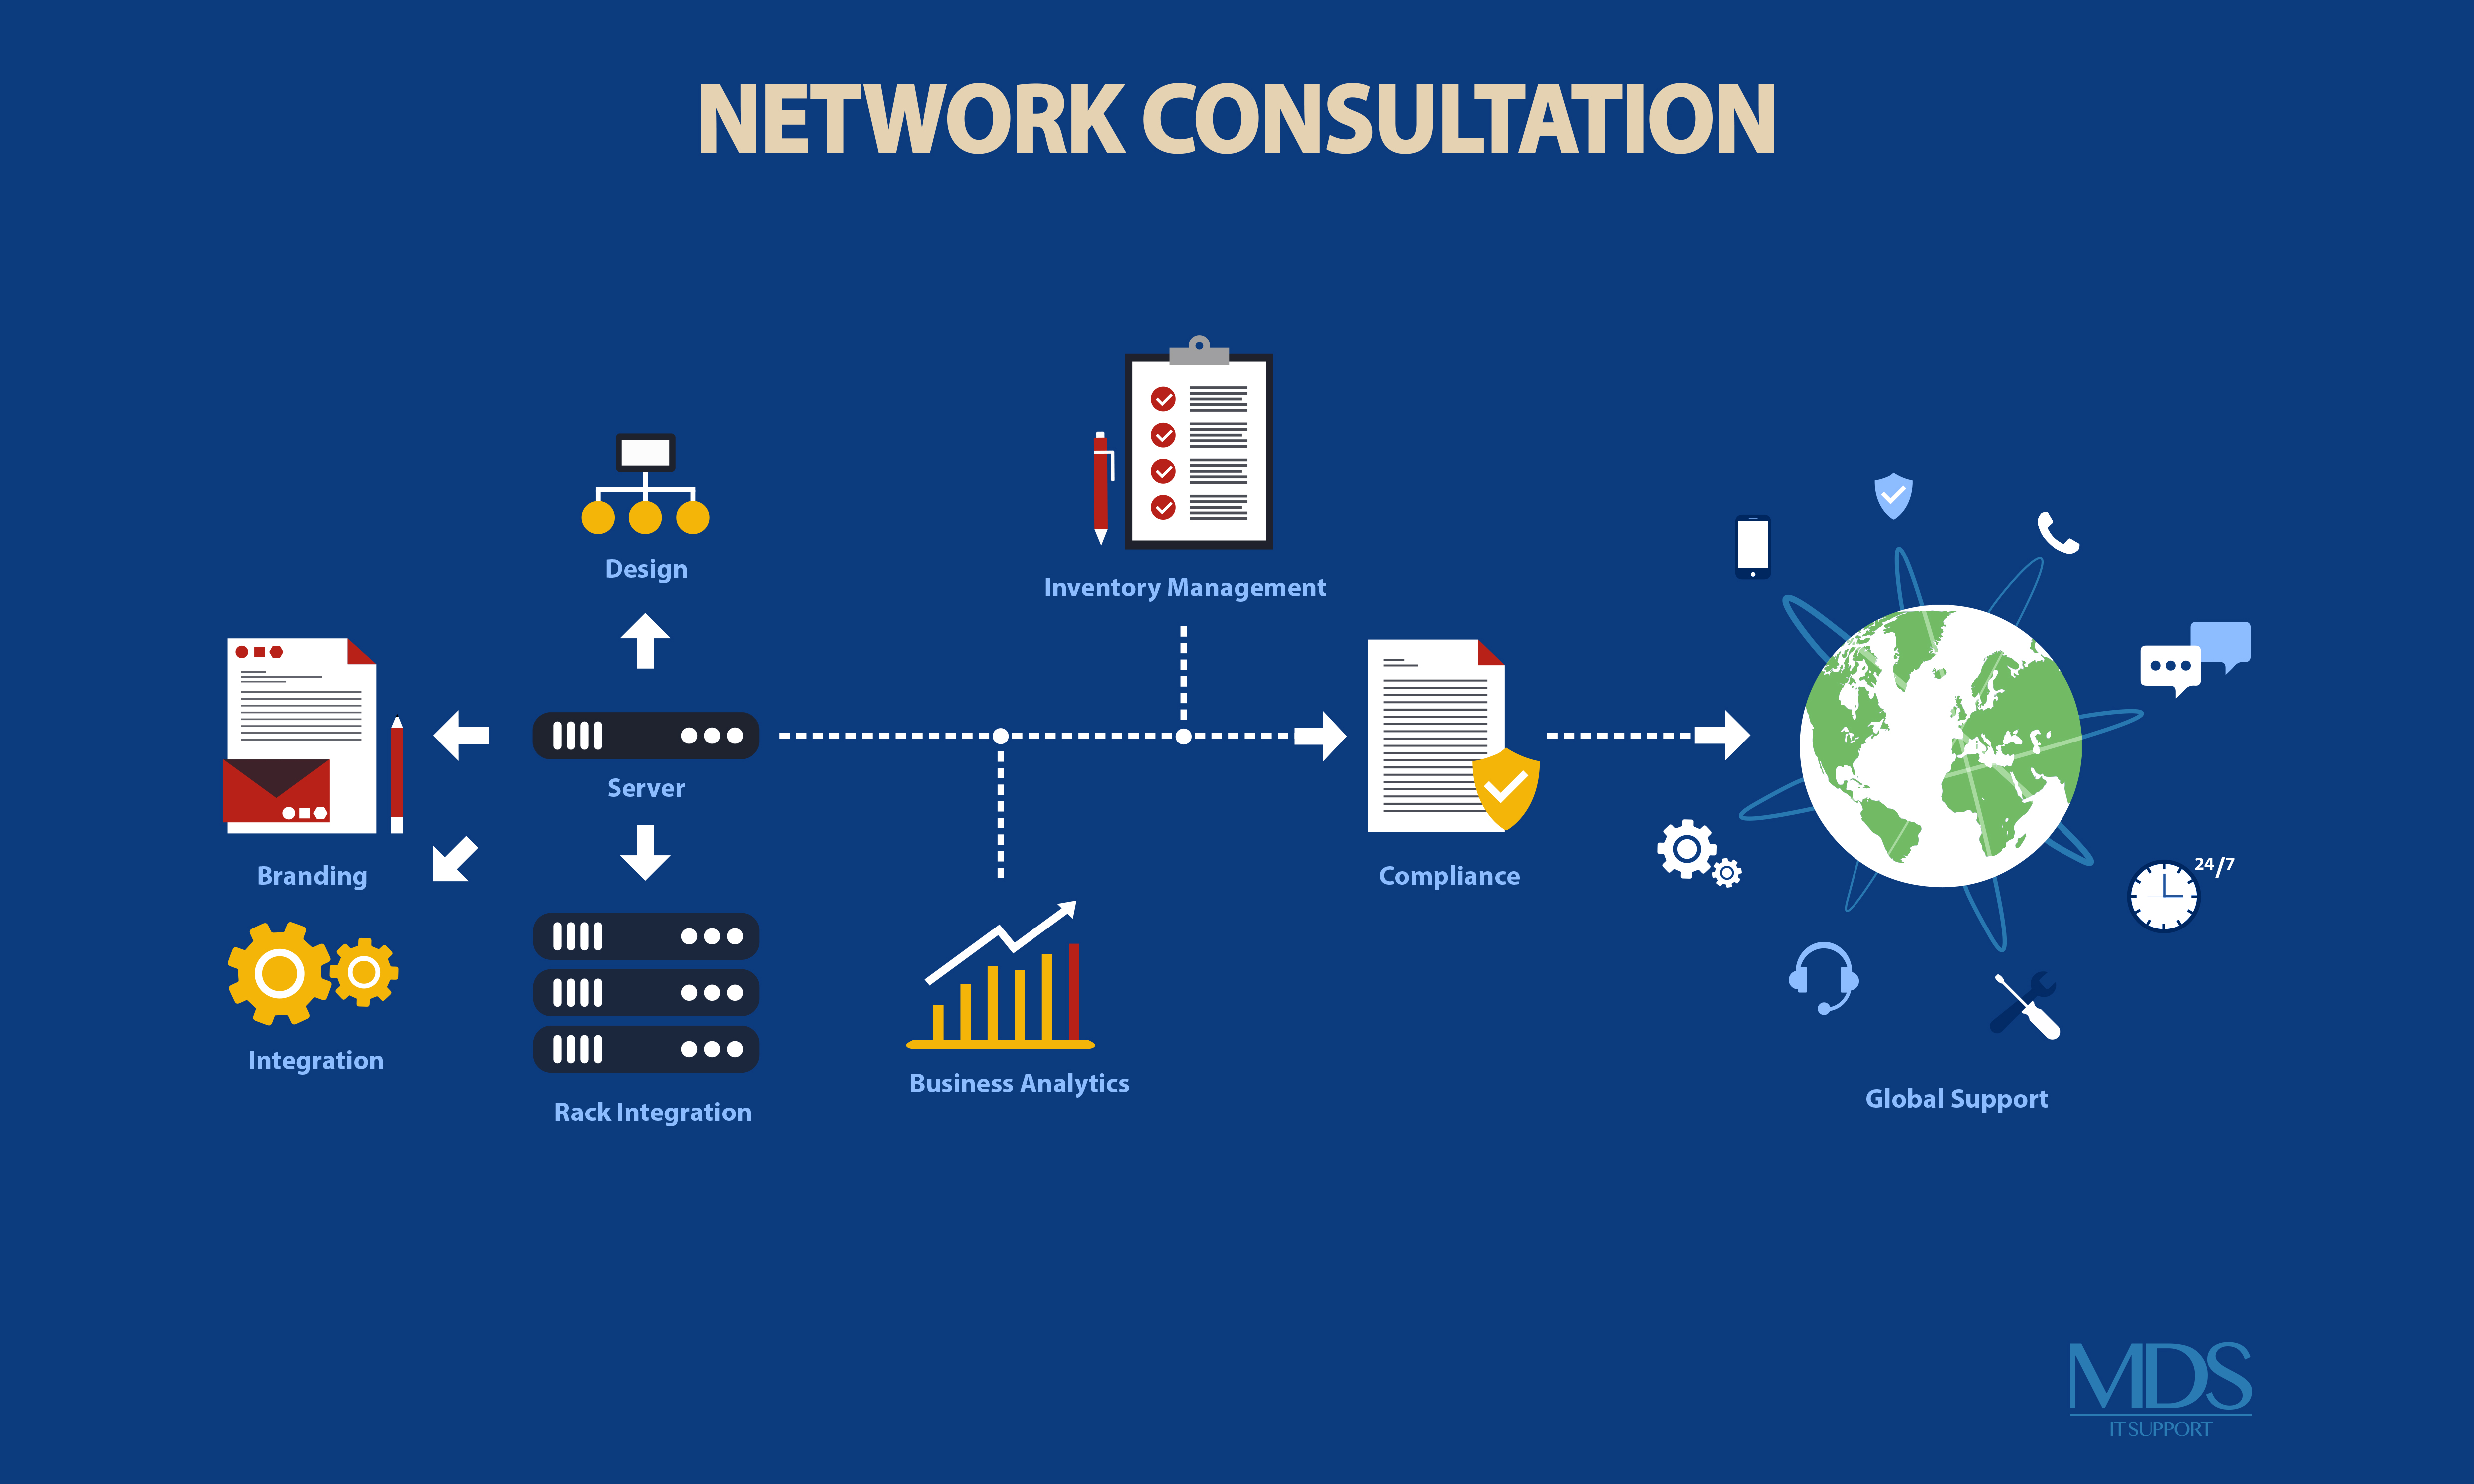 Network Consultation